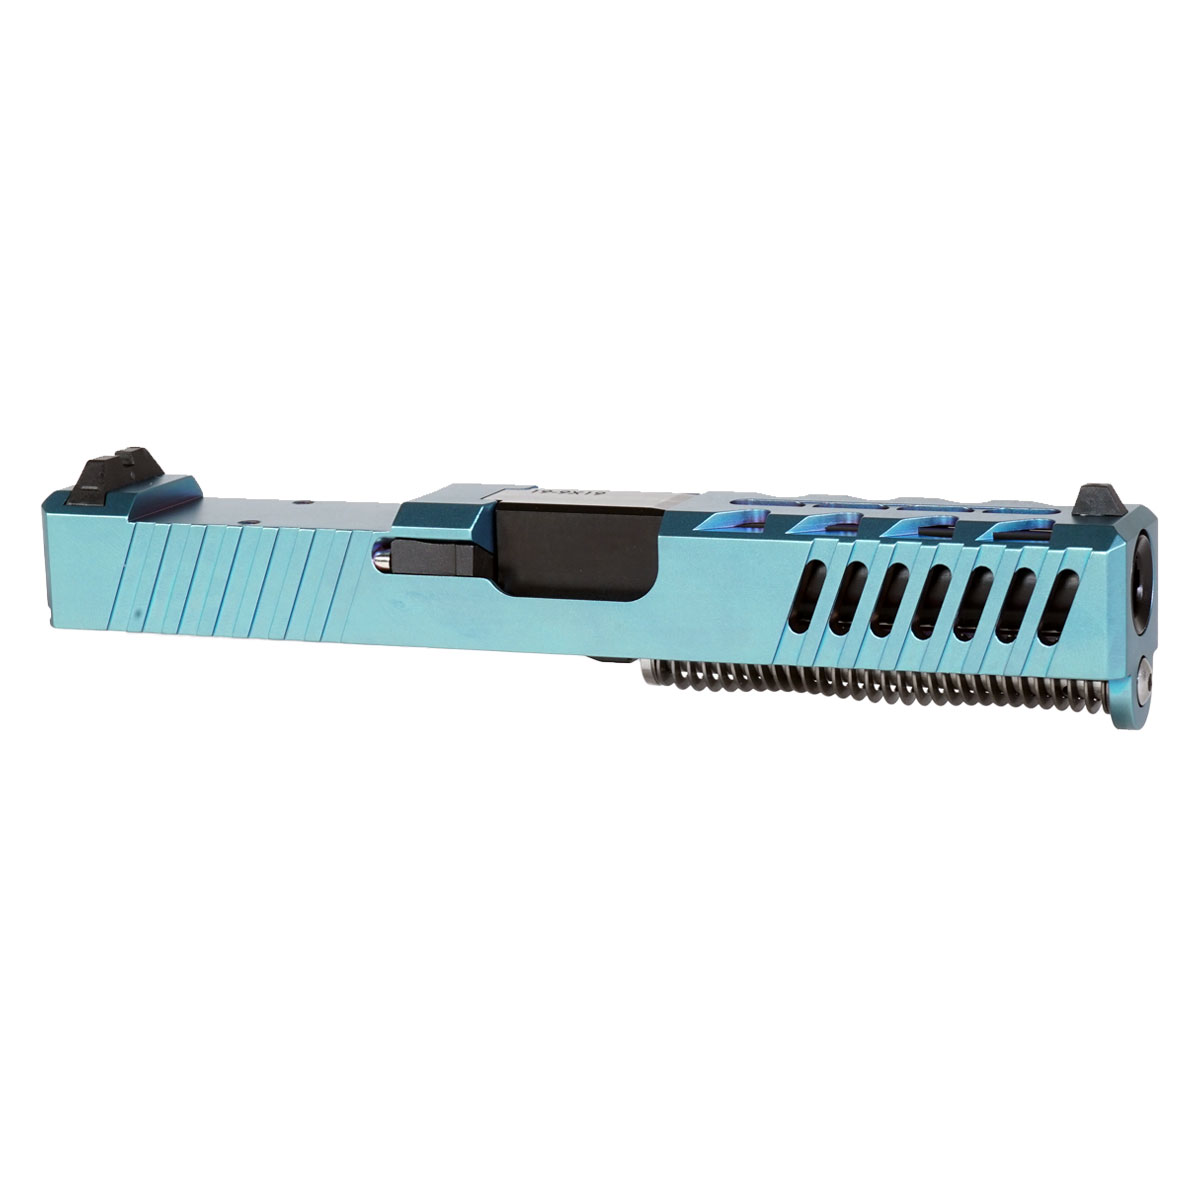 MMC 'Ripplemaker' 9mm Complete Slide Kit - Glock 19 Gen 1-3 Compatible